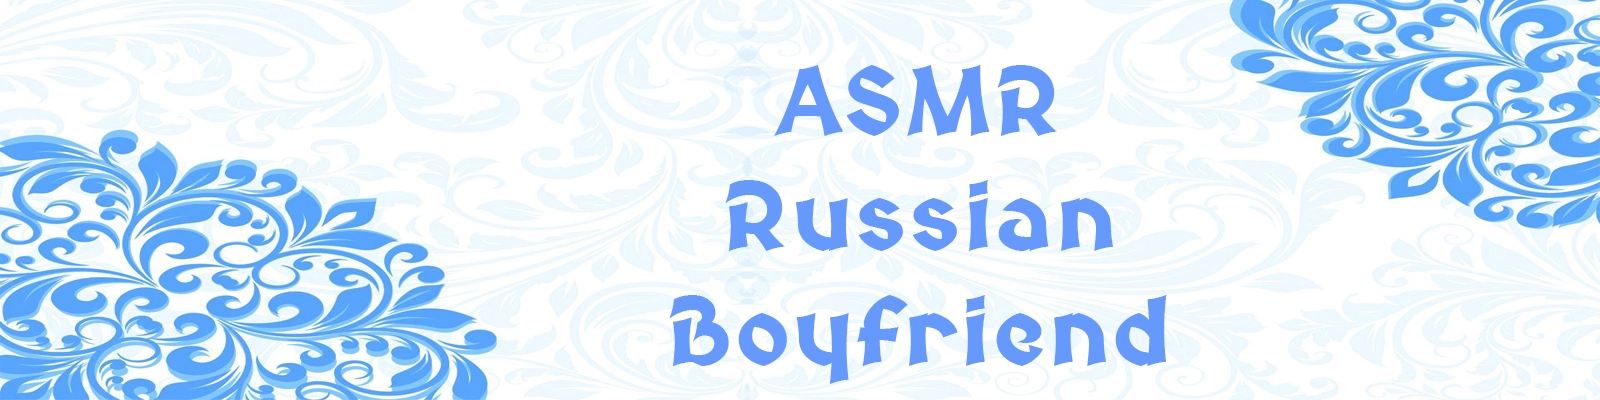 ASMR Russian Boyfriend [v0.01] main image